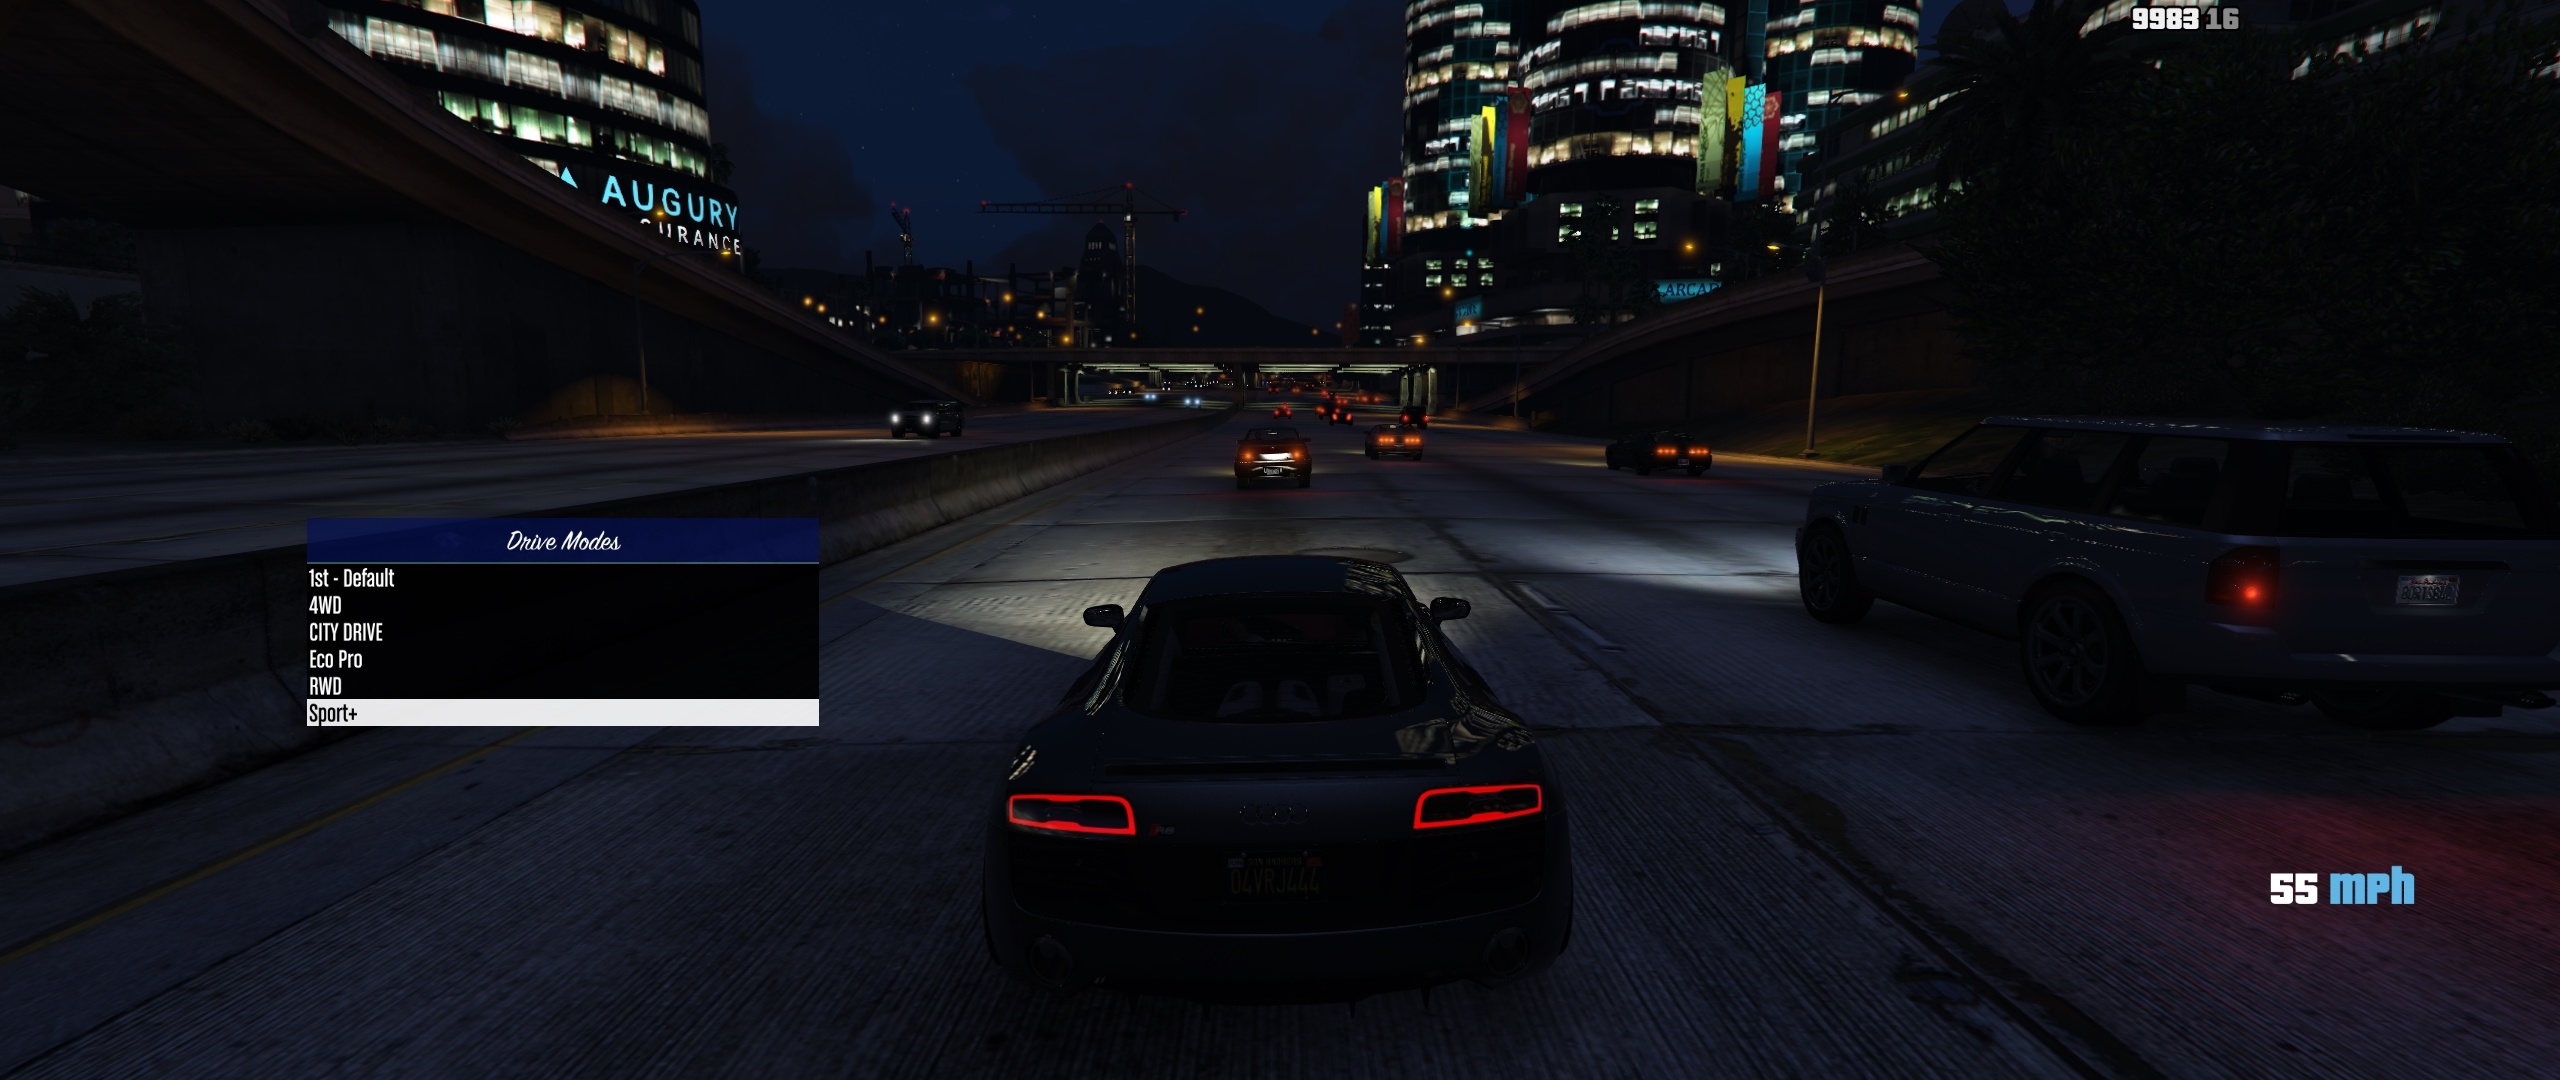 Handling GTA 5. Vehicle Drive Modes. V Drive. Default City. Drive mode cars modes